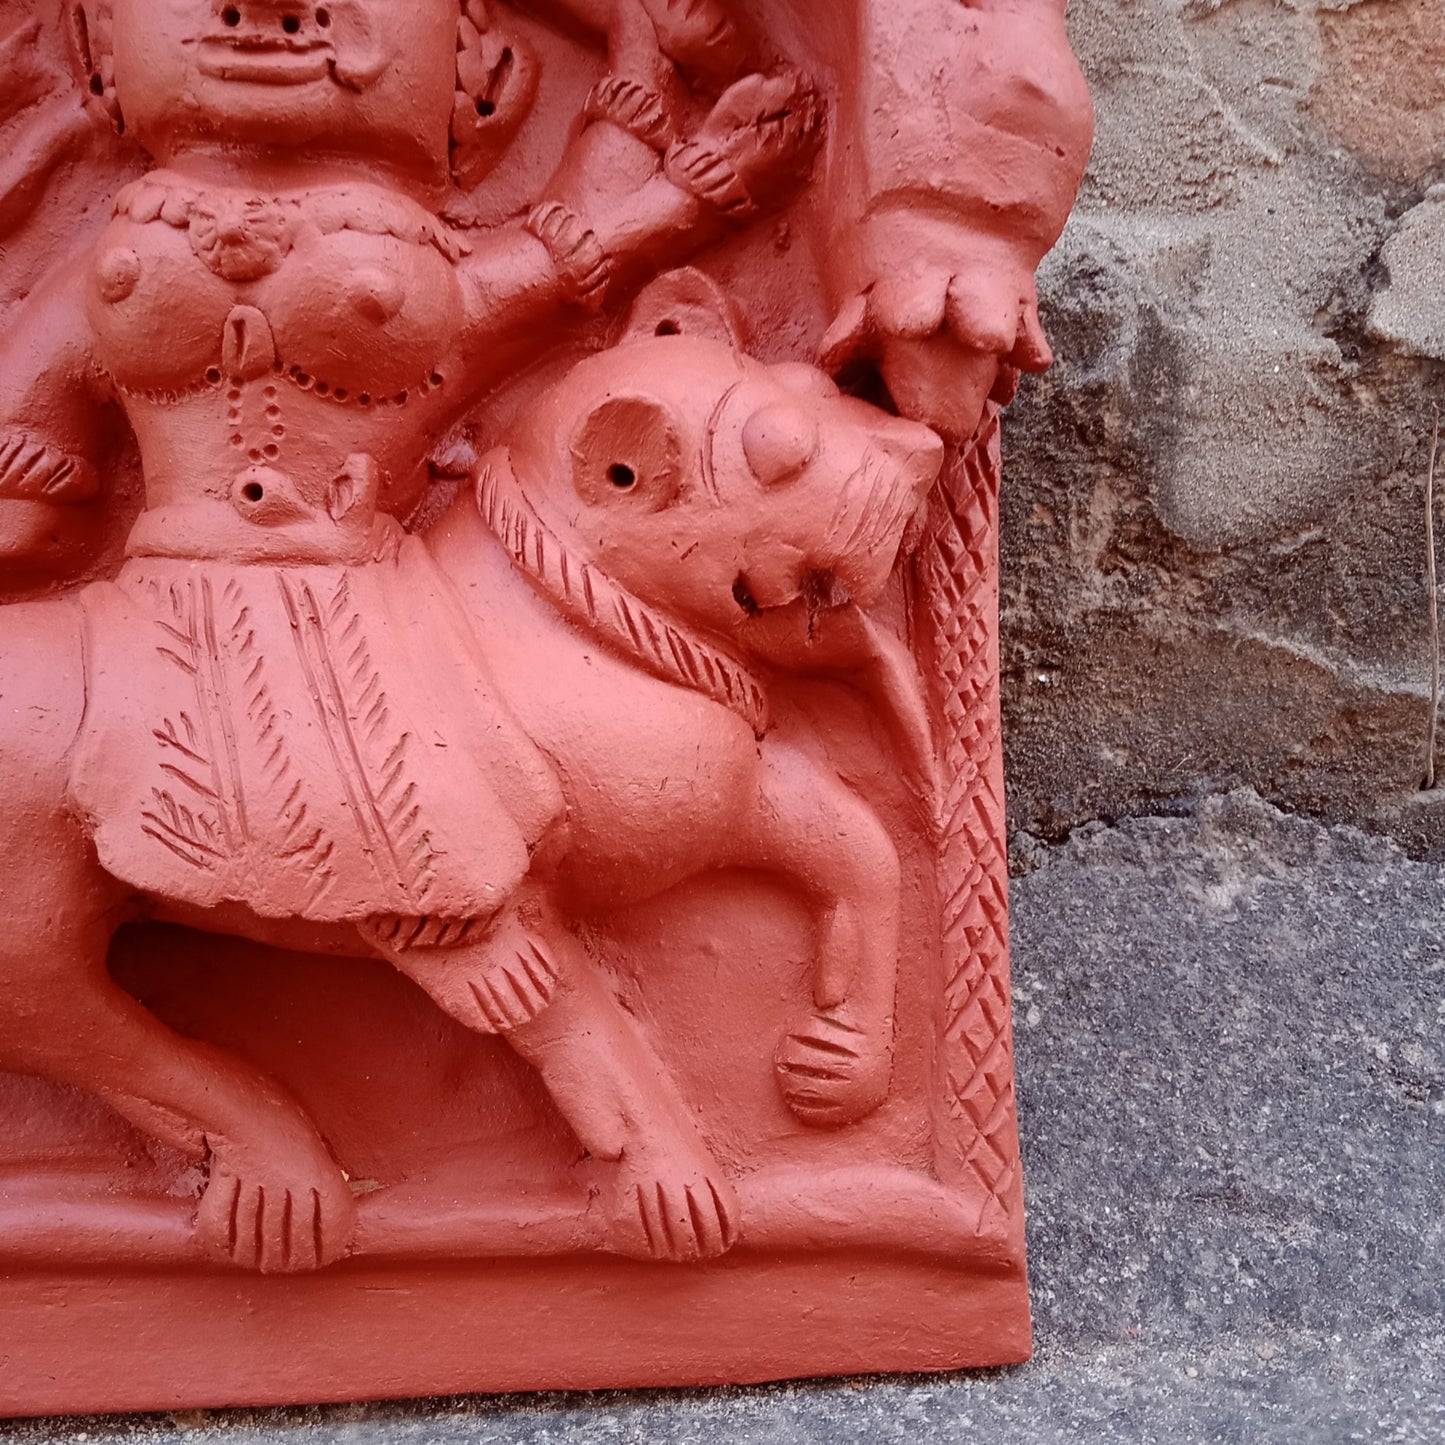 Mother Goddess on Tiger terracotta plaque